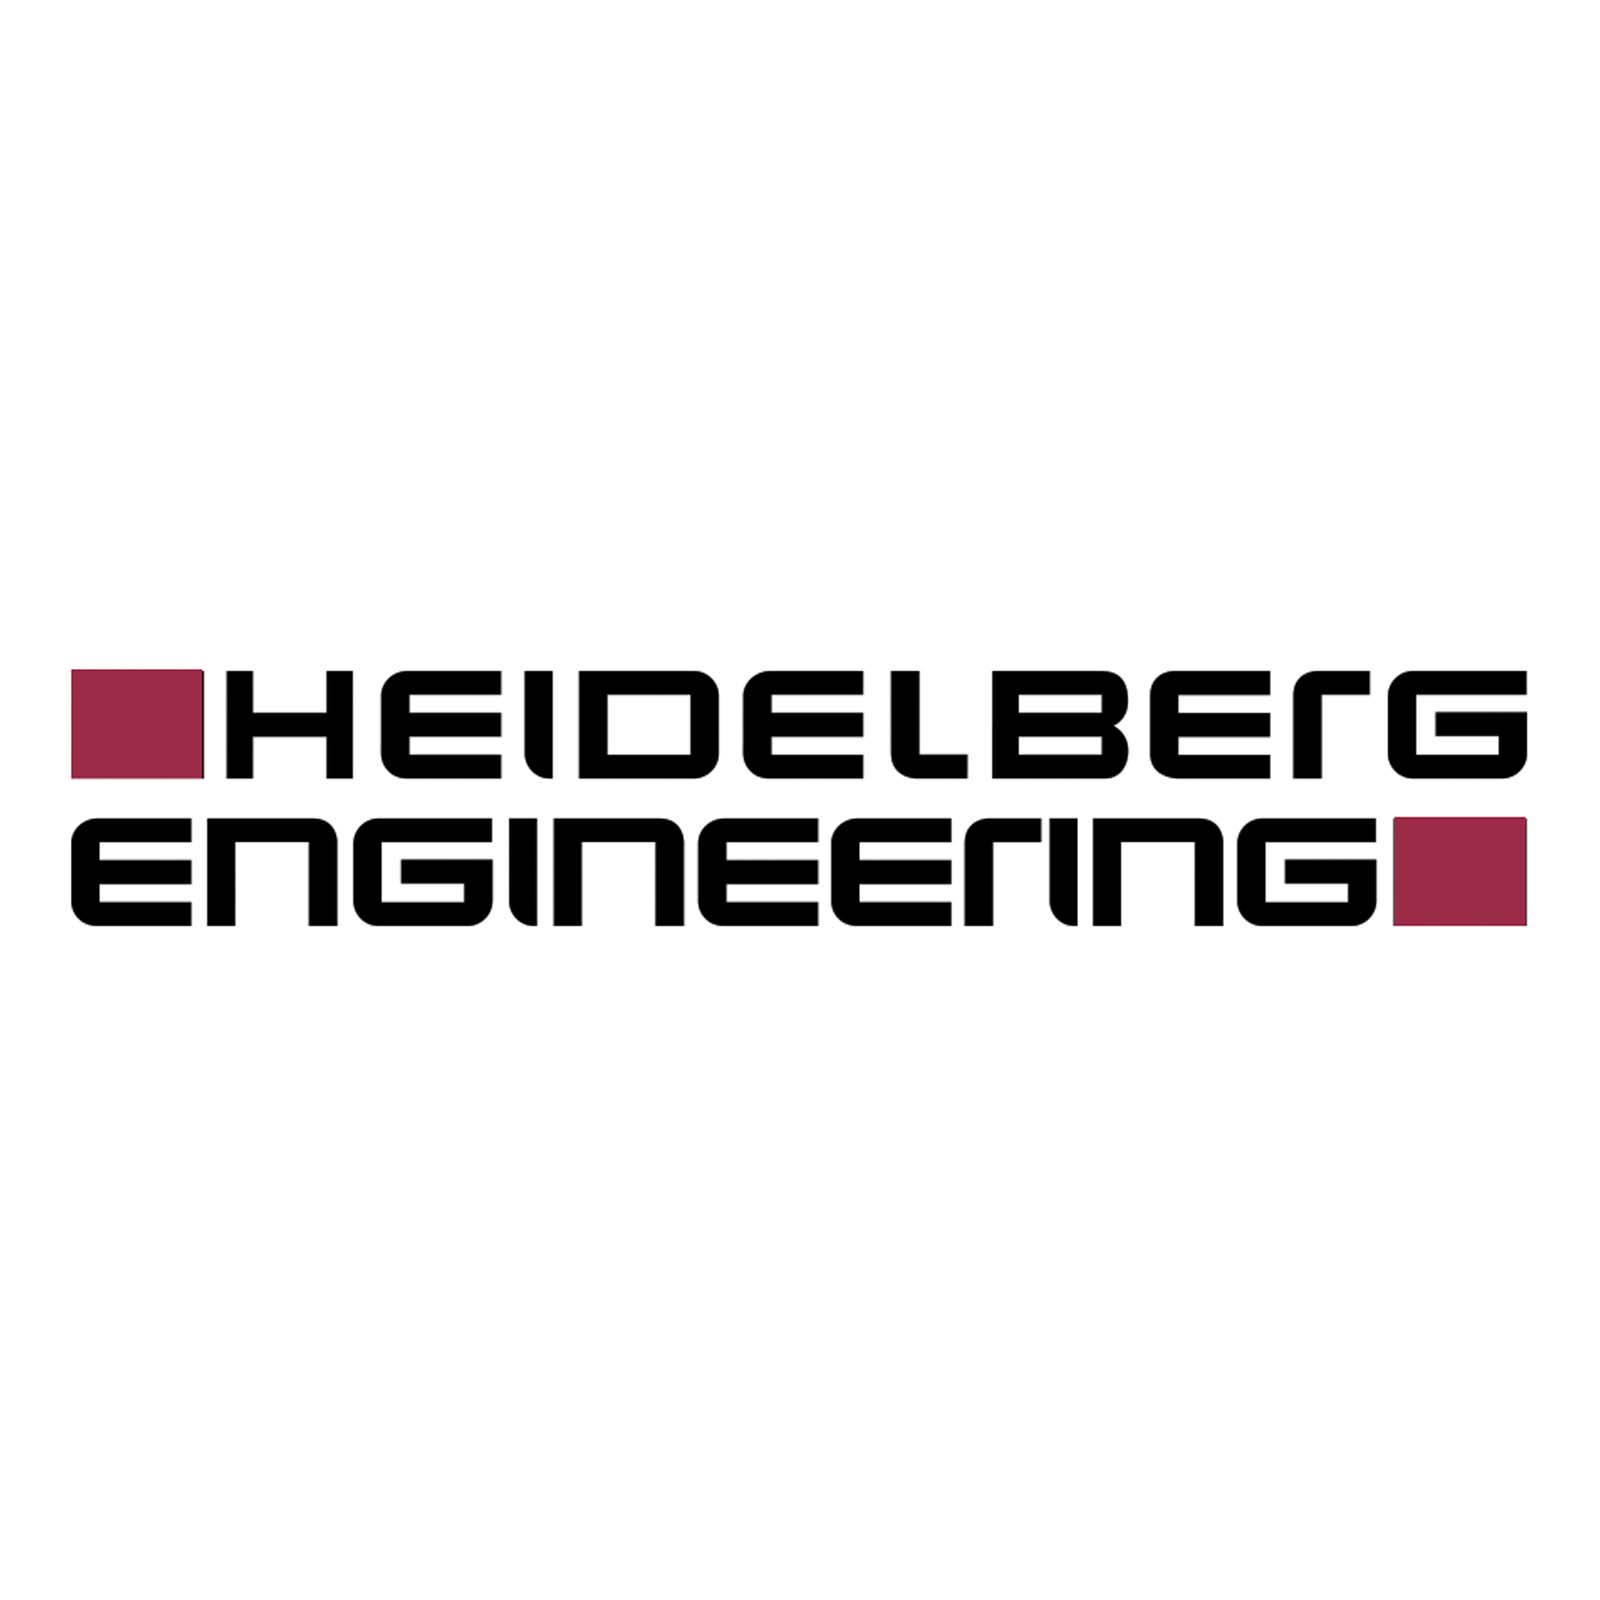 Heidelberg Engineering GmbH [30809]